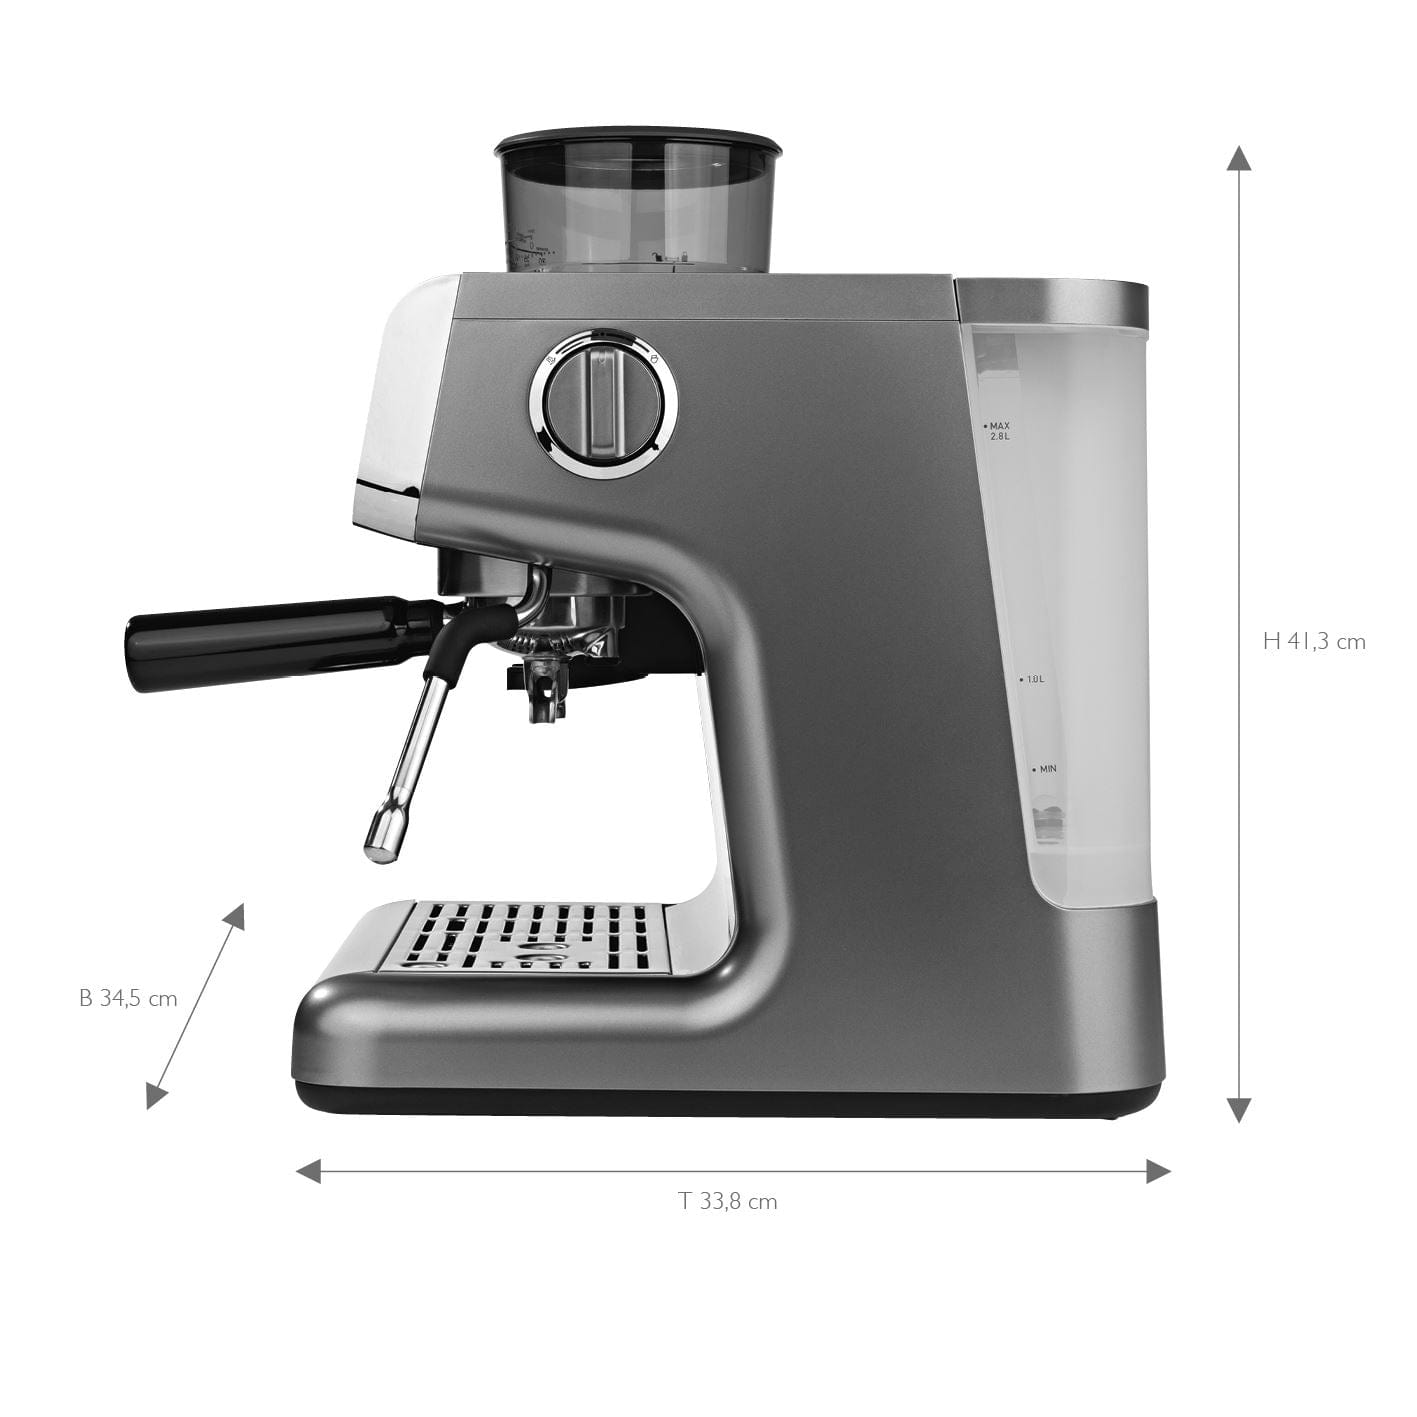 ESPRESSO-GRIND-PROFESSION Espresso Portafilter Machine with Grinder - 15 bar